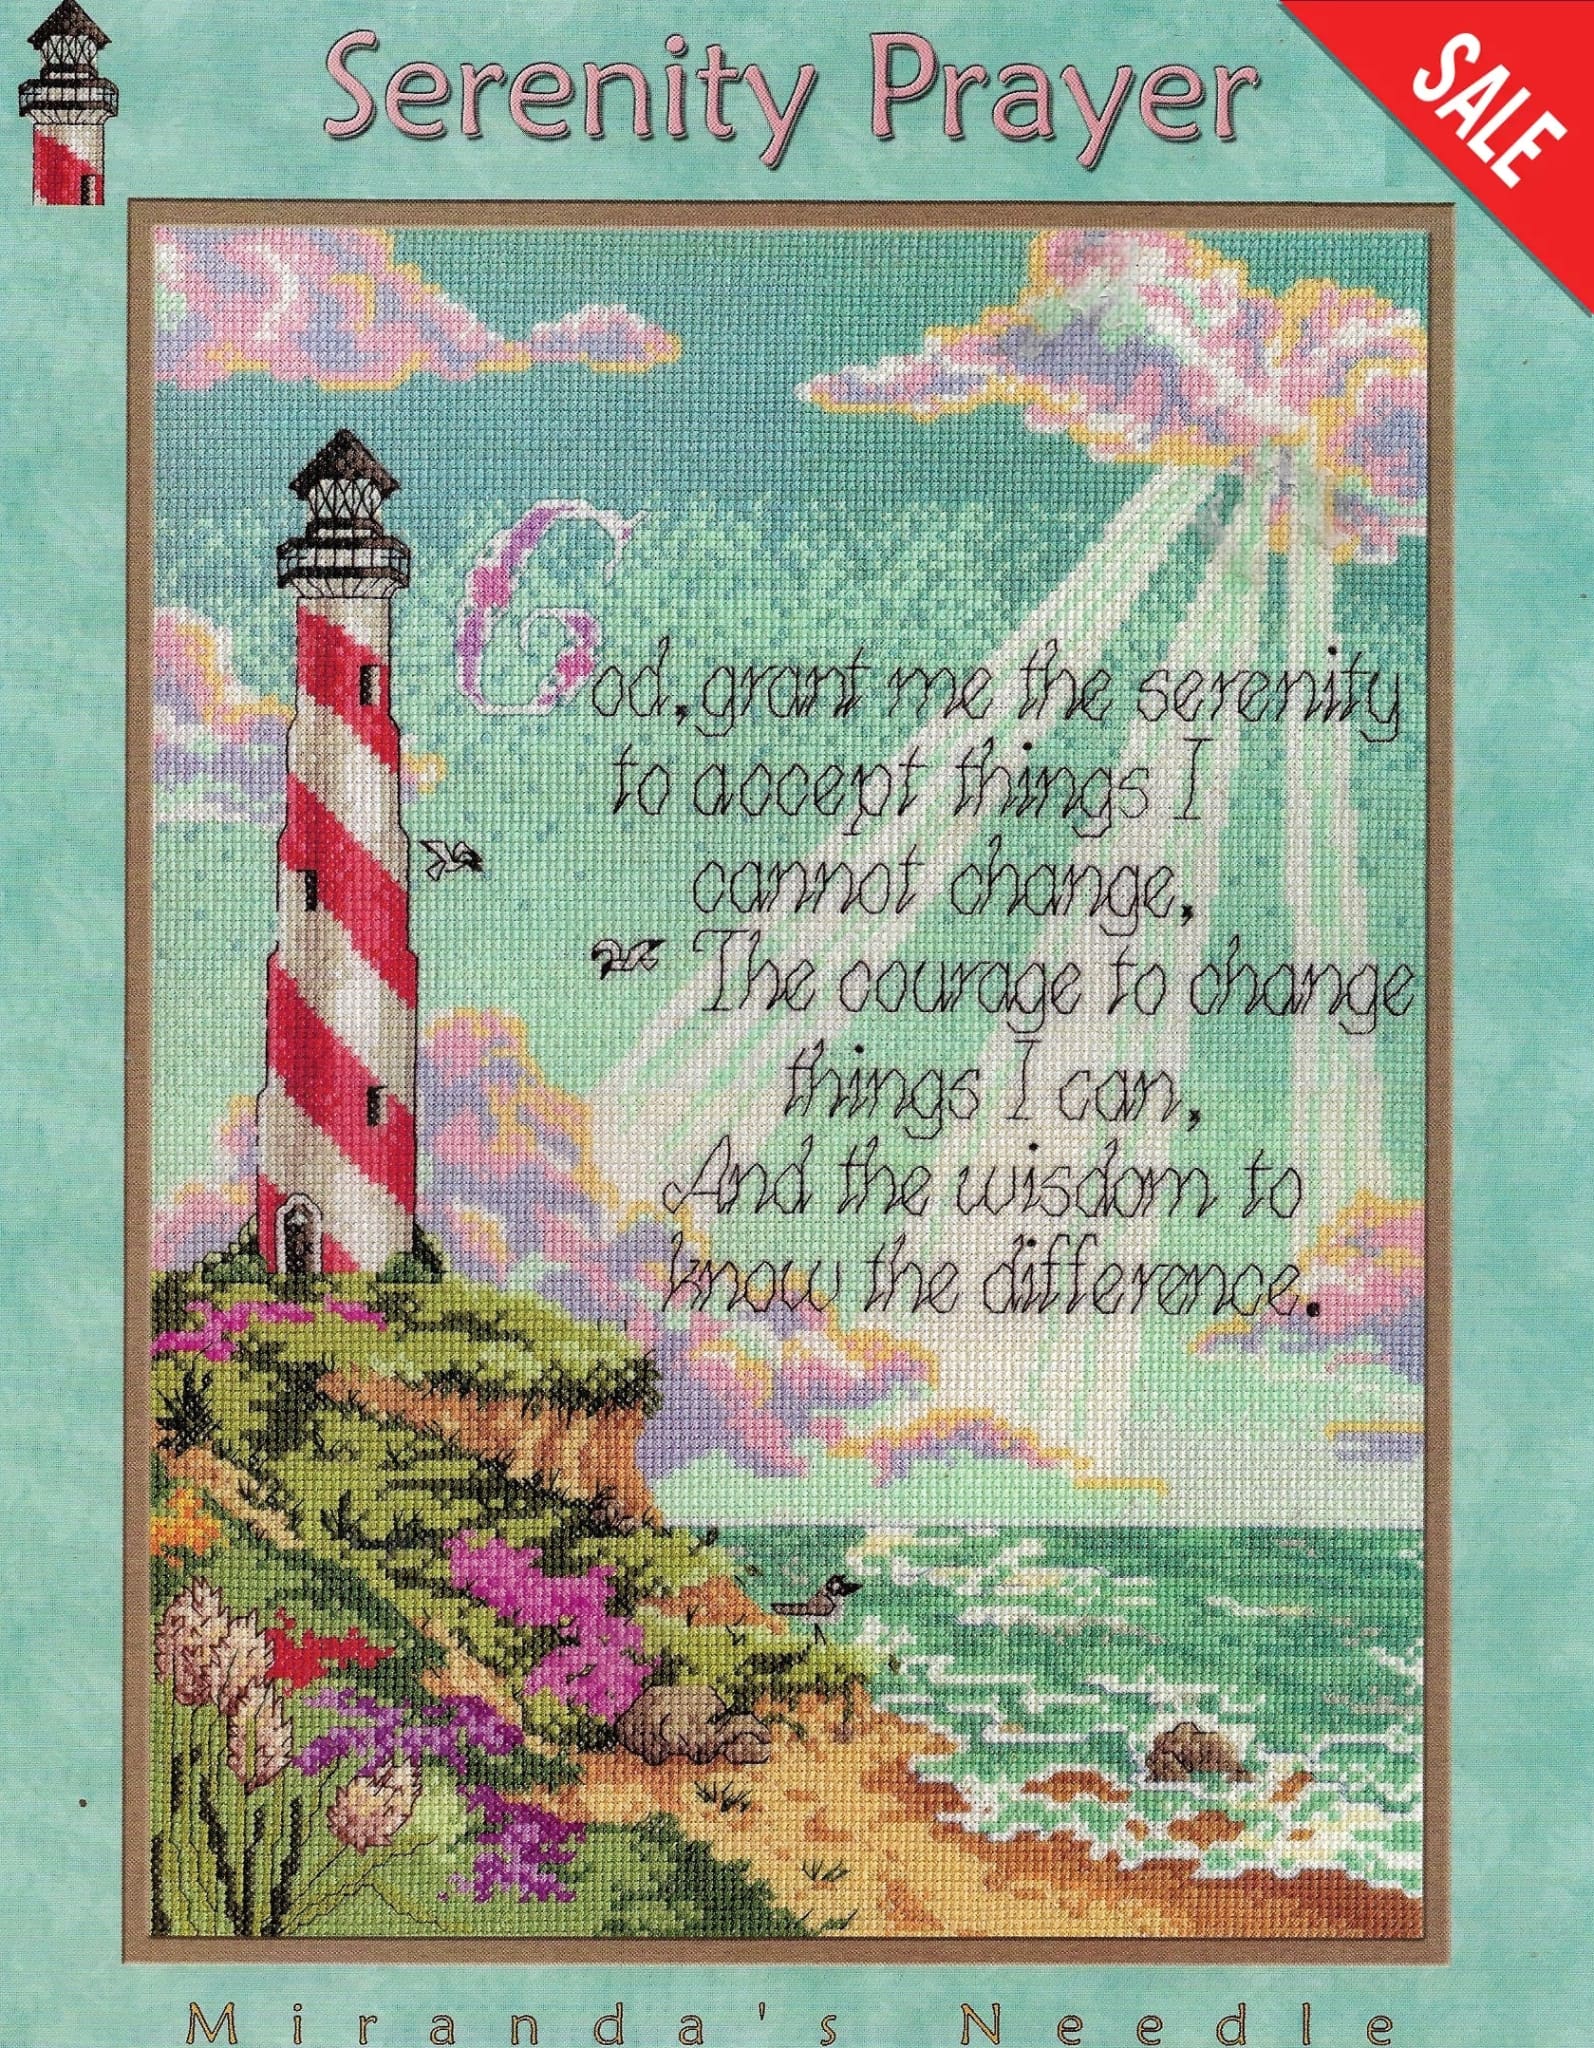 Miranda's Needle Serenity Prayer lighthouse cross stitch pattern